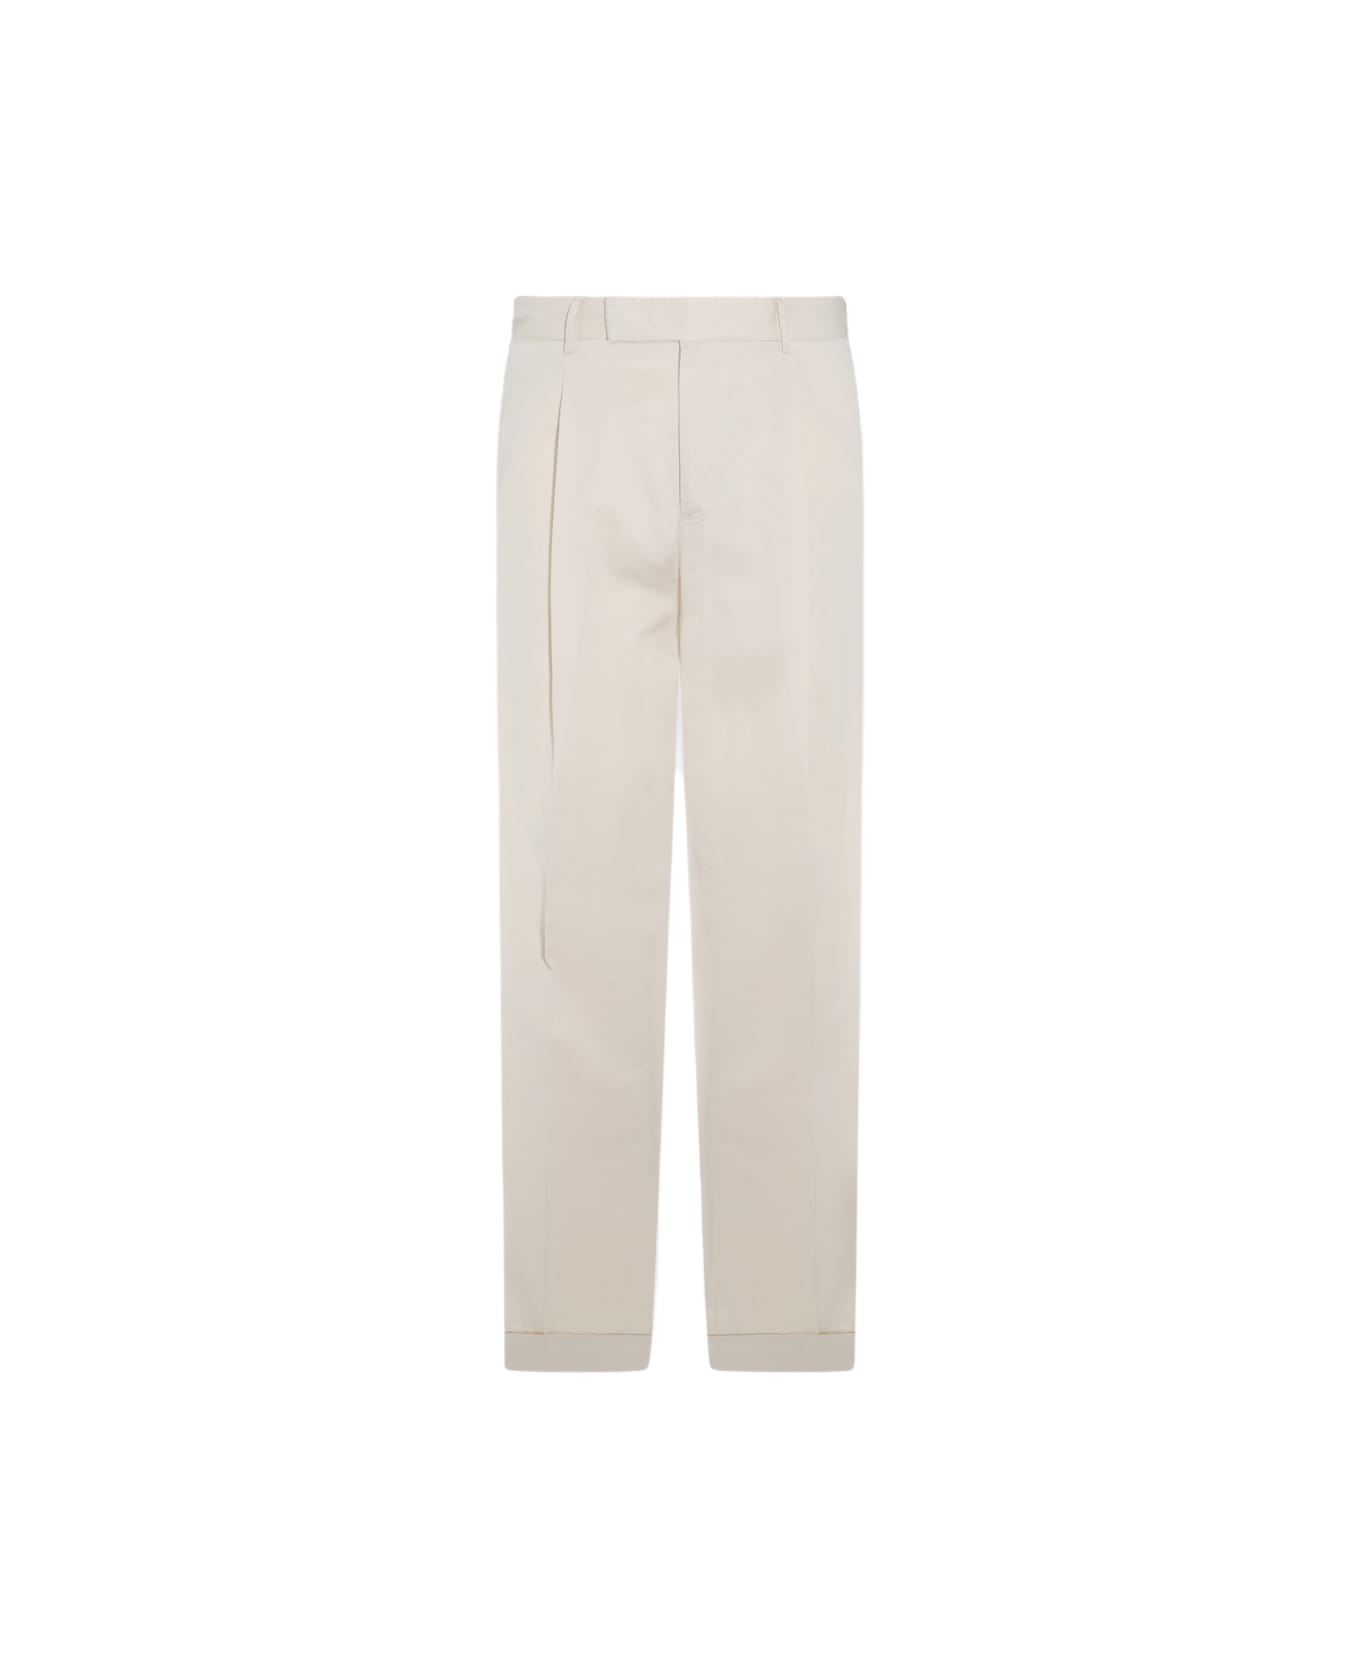 PT01 White Cotton Pants - Cream